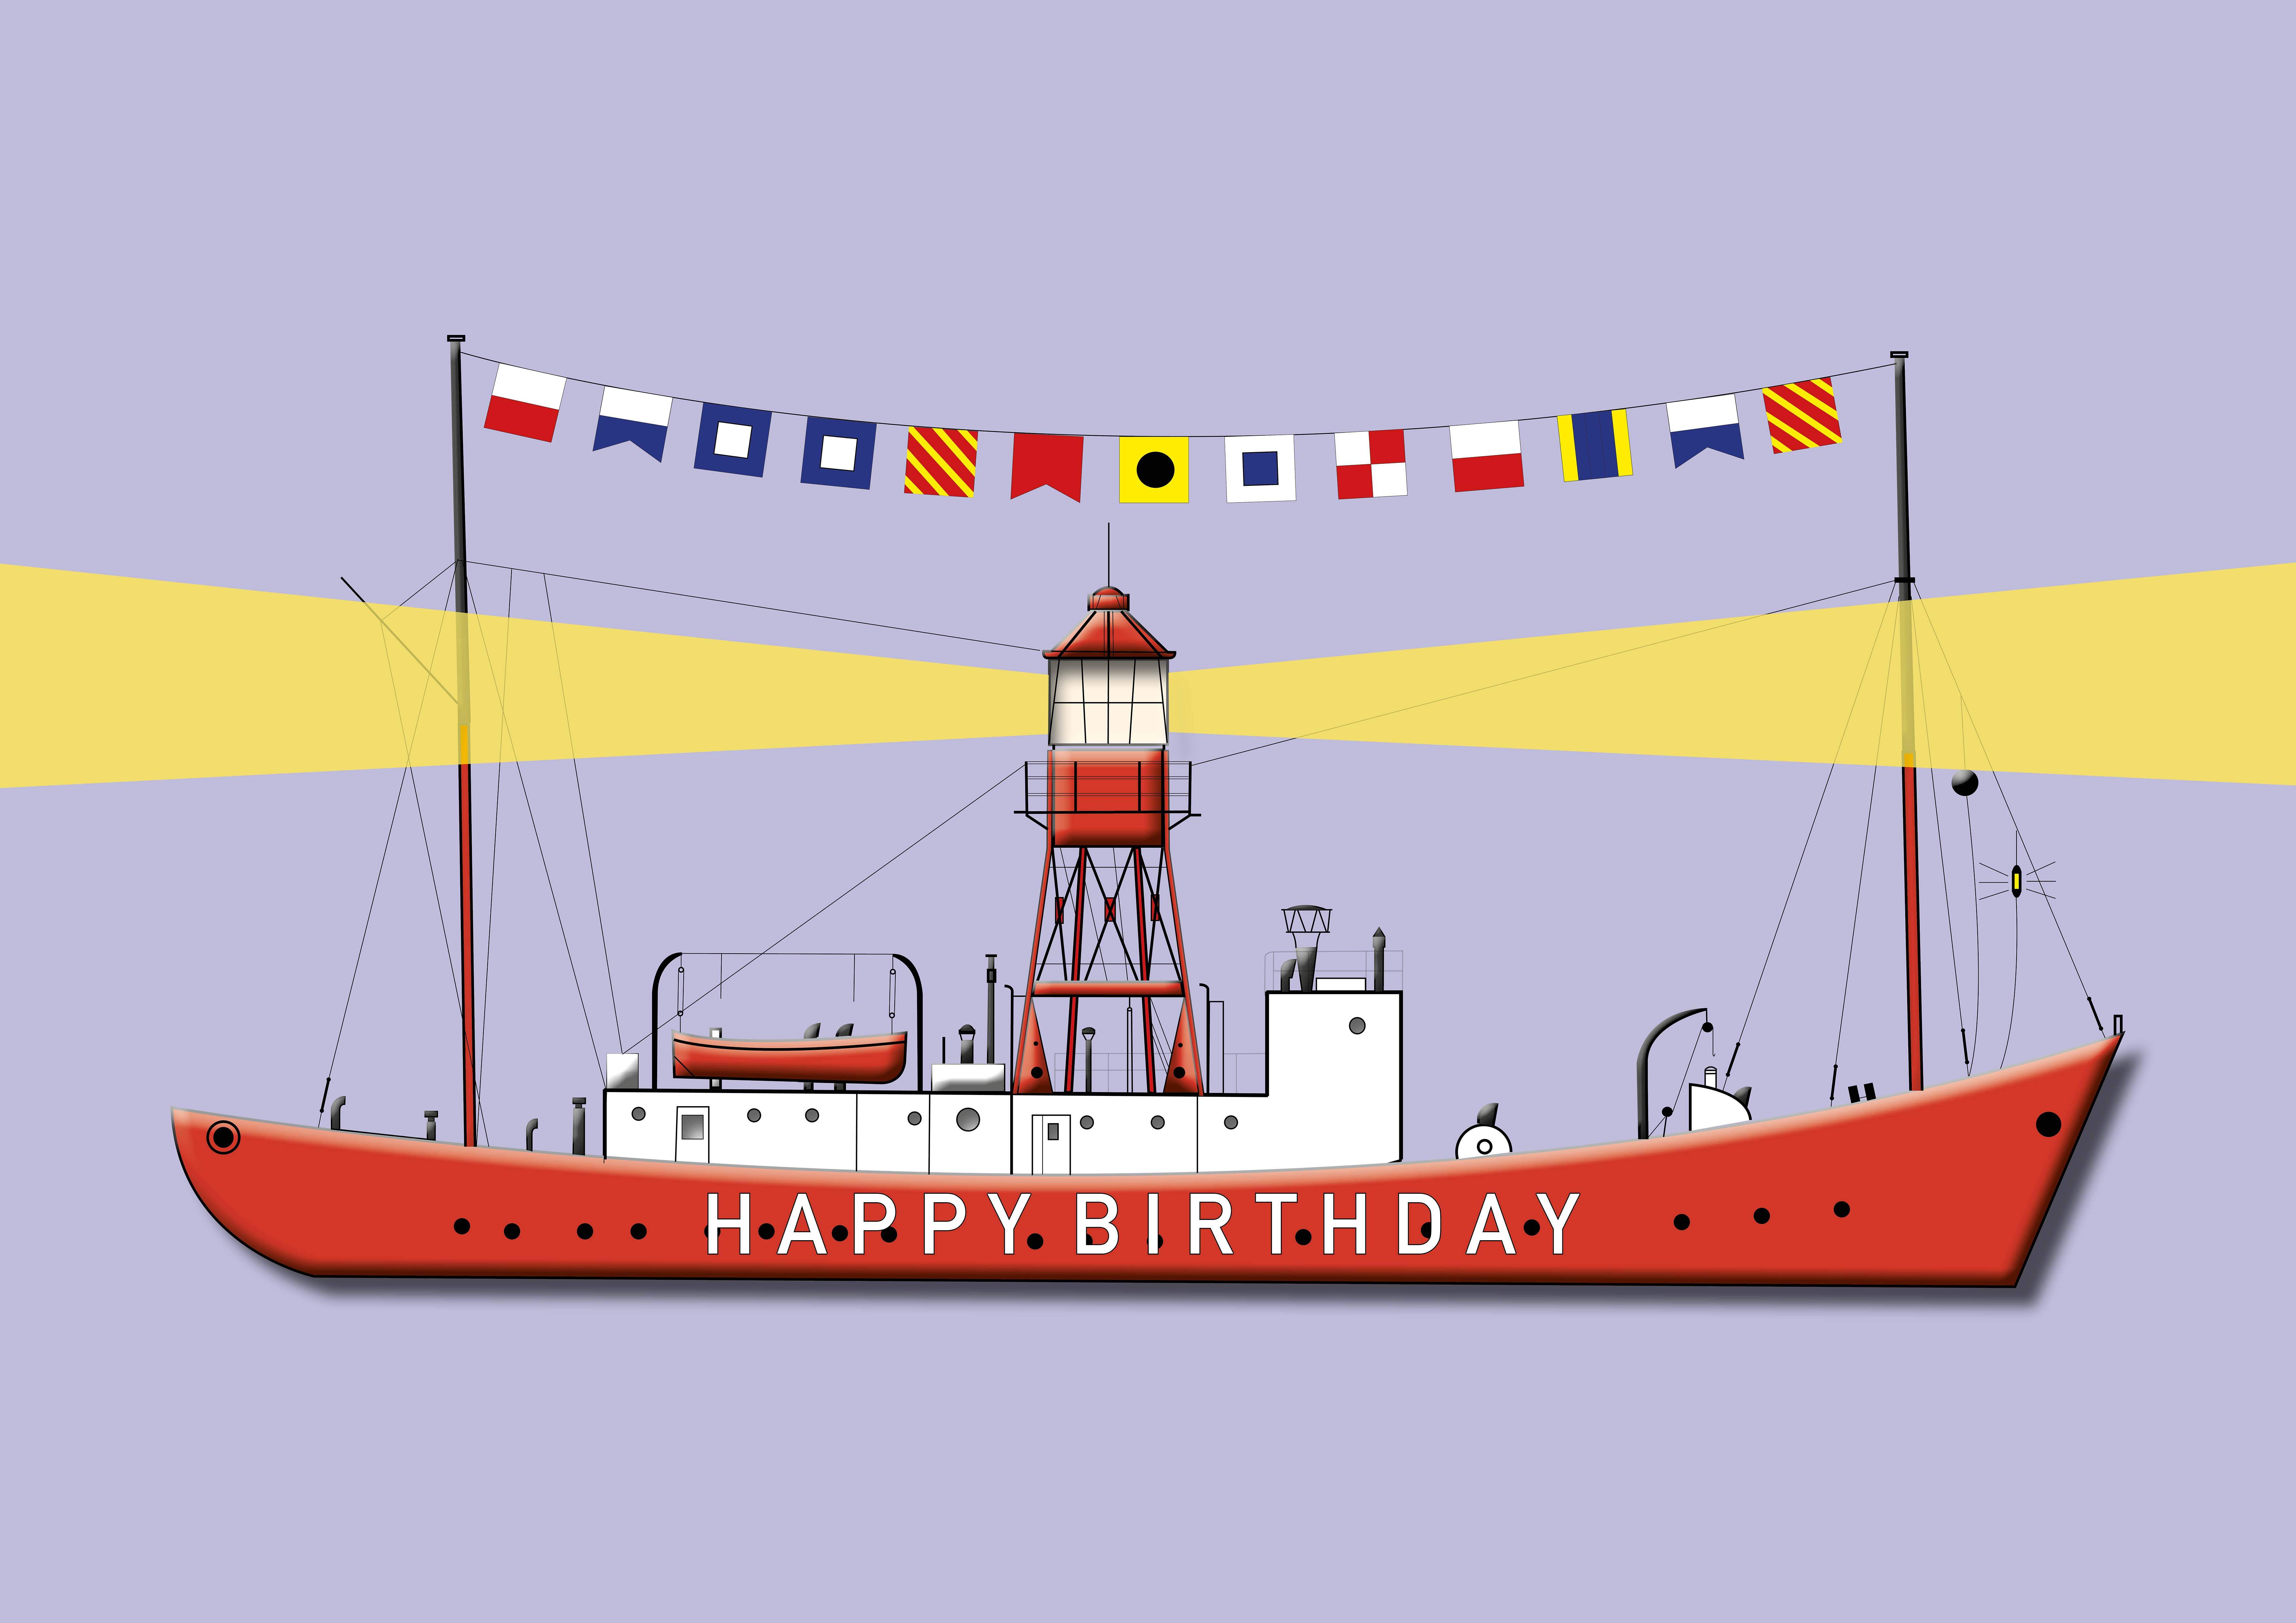 Happy Birthday - Lightship Greetings Cards - Pack of 4